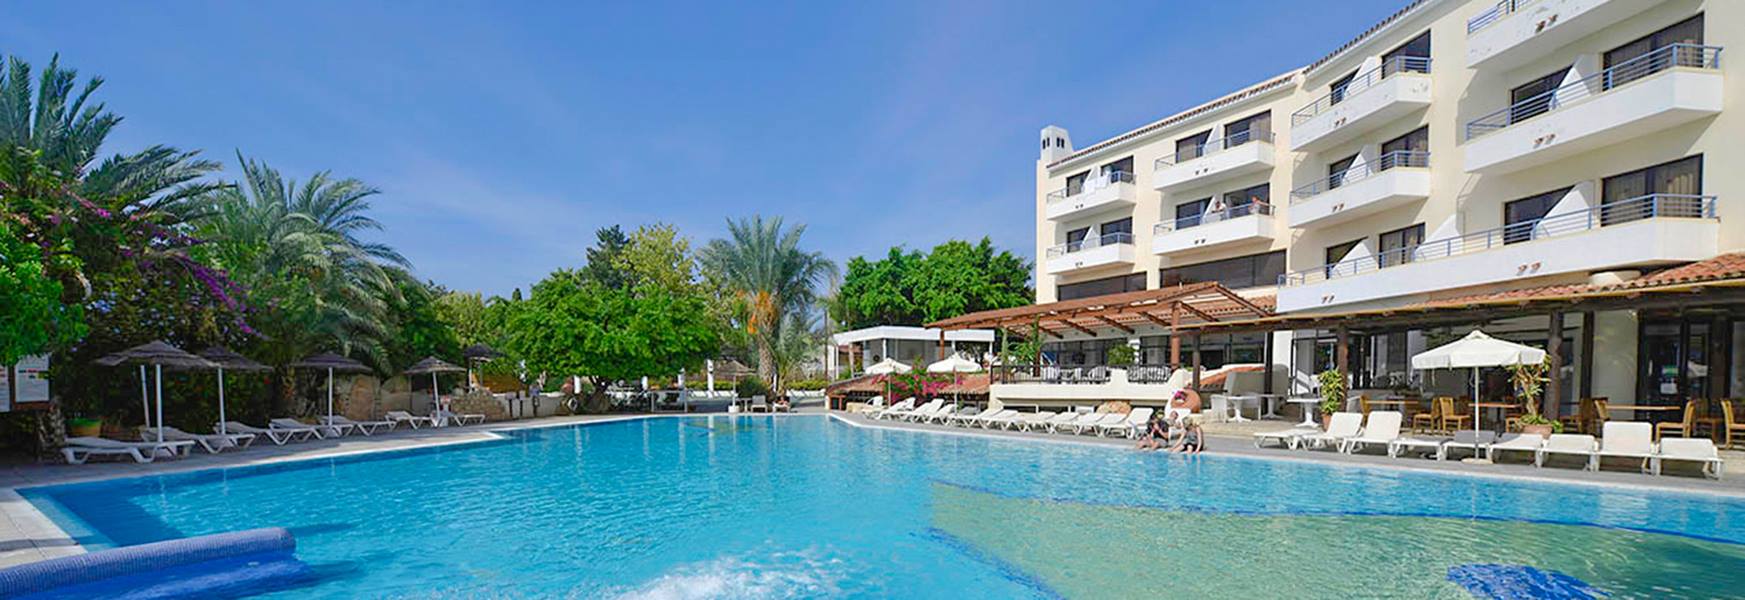 Hotel Paphos Gardens Holiday Resort 